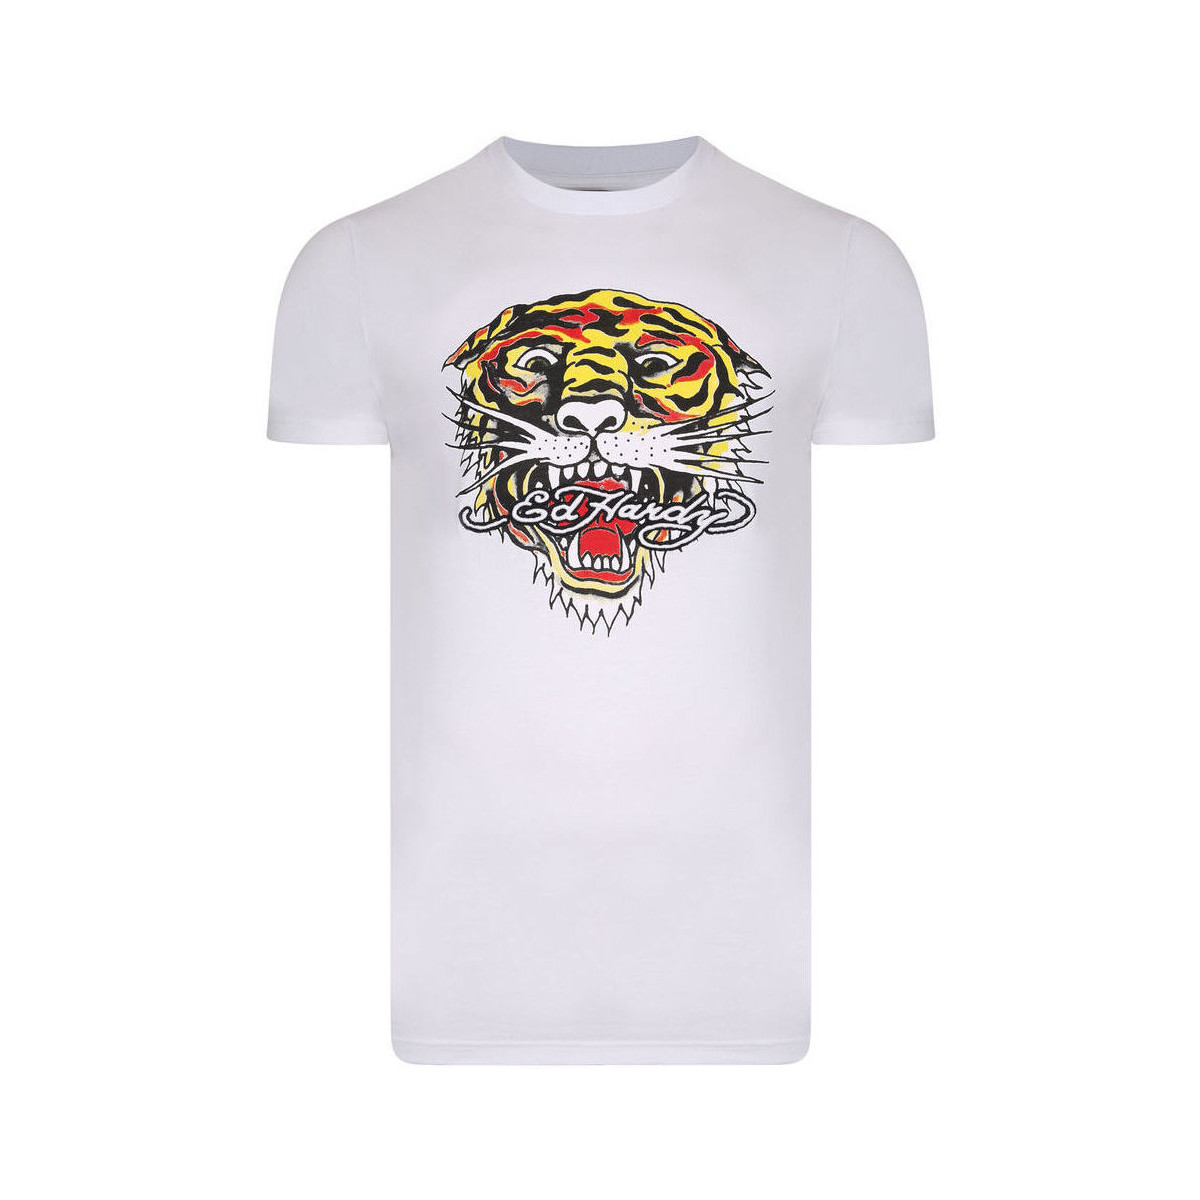 textil Herr T-shirts Ed Hardy Mt-tiger t-shirt Vit